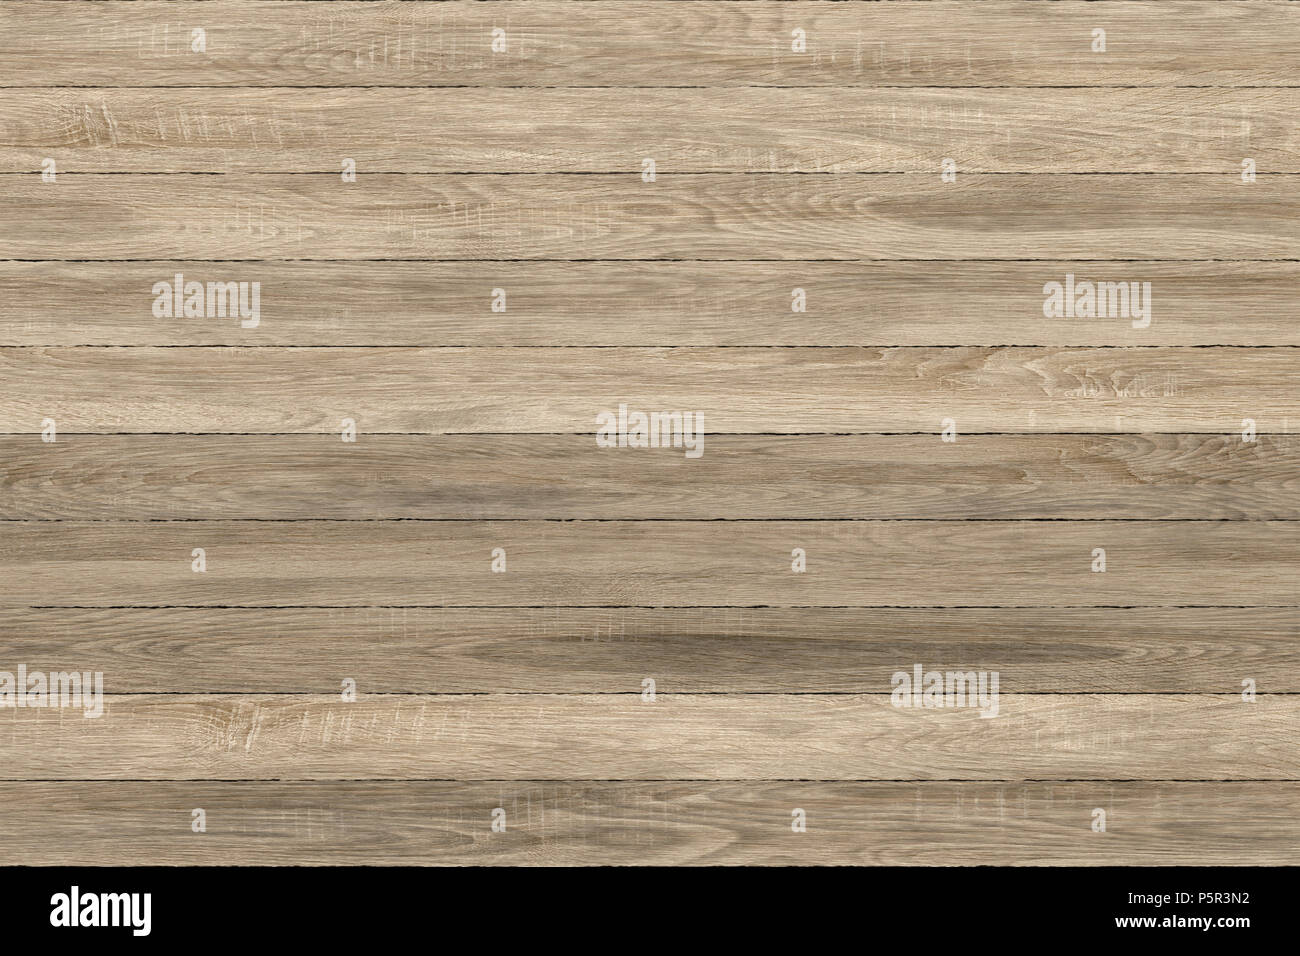 Light grunge wood panels. Planks Background. Old wall wooden vintage floor Stock Photo